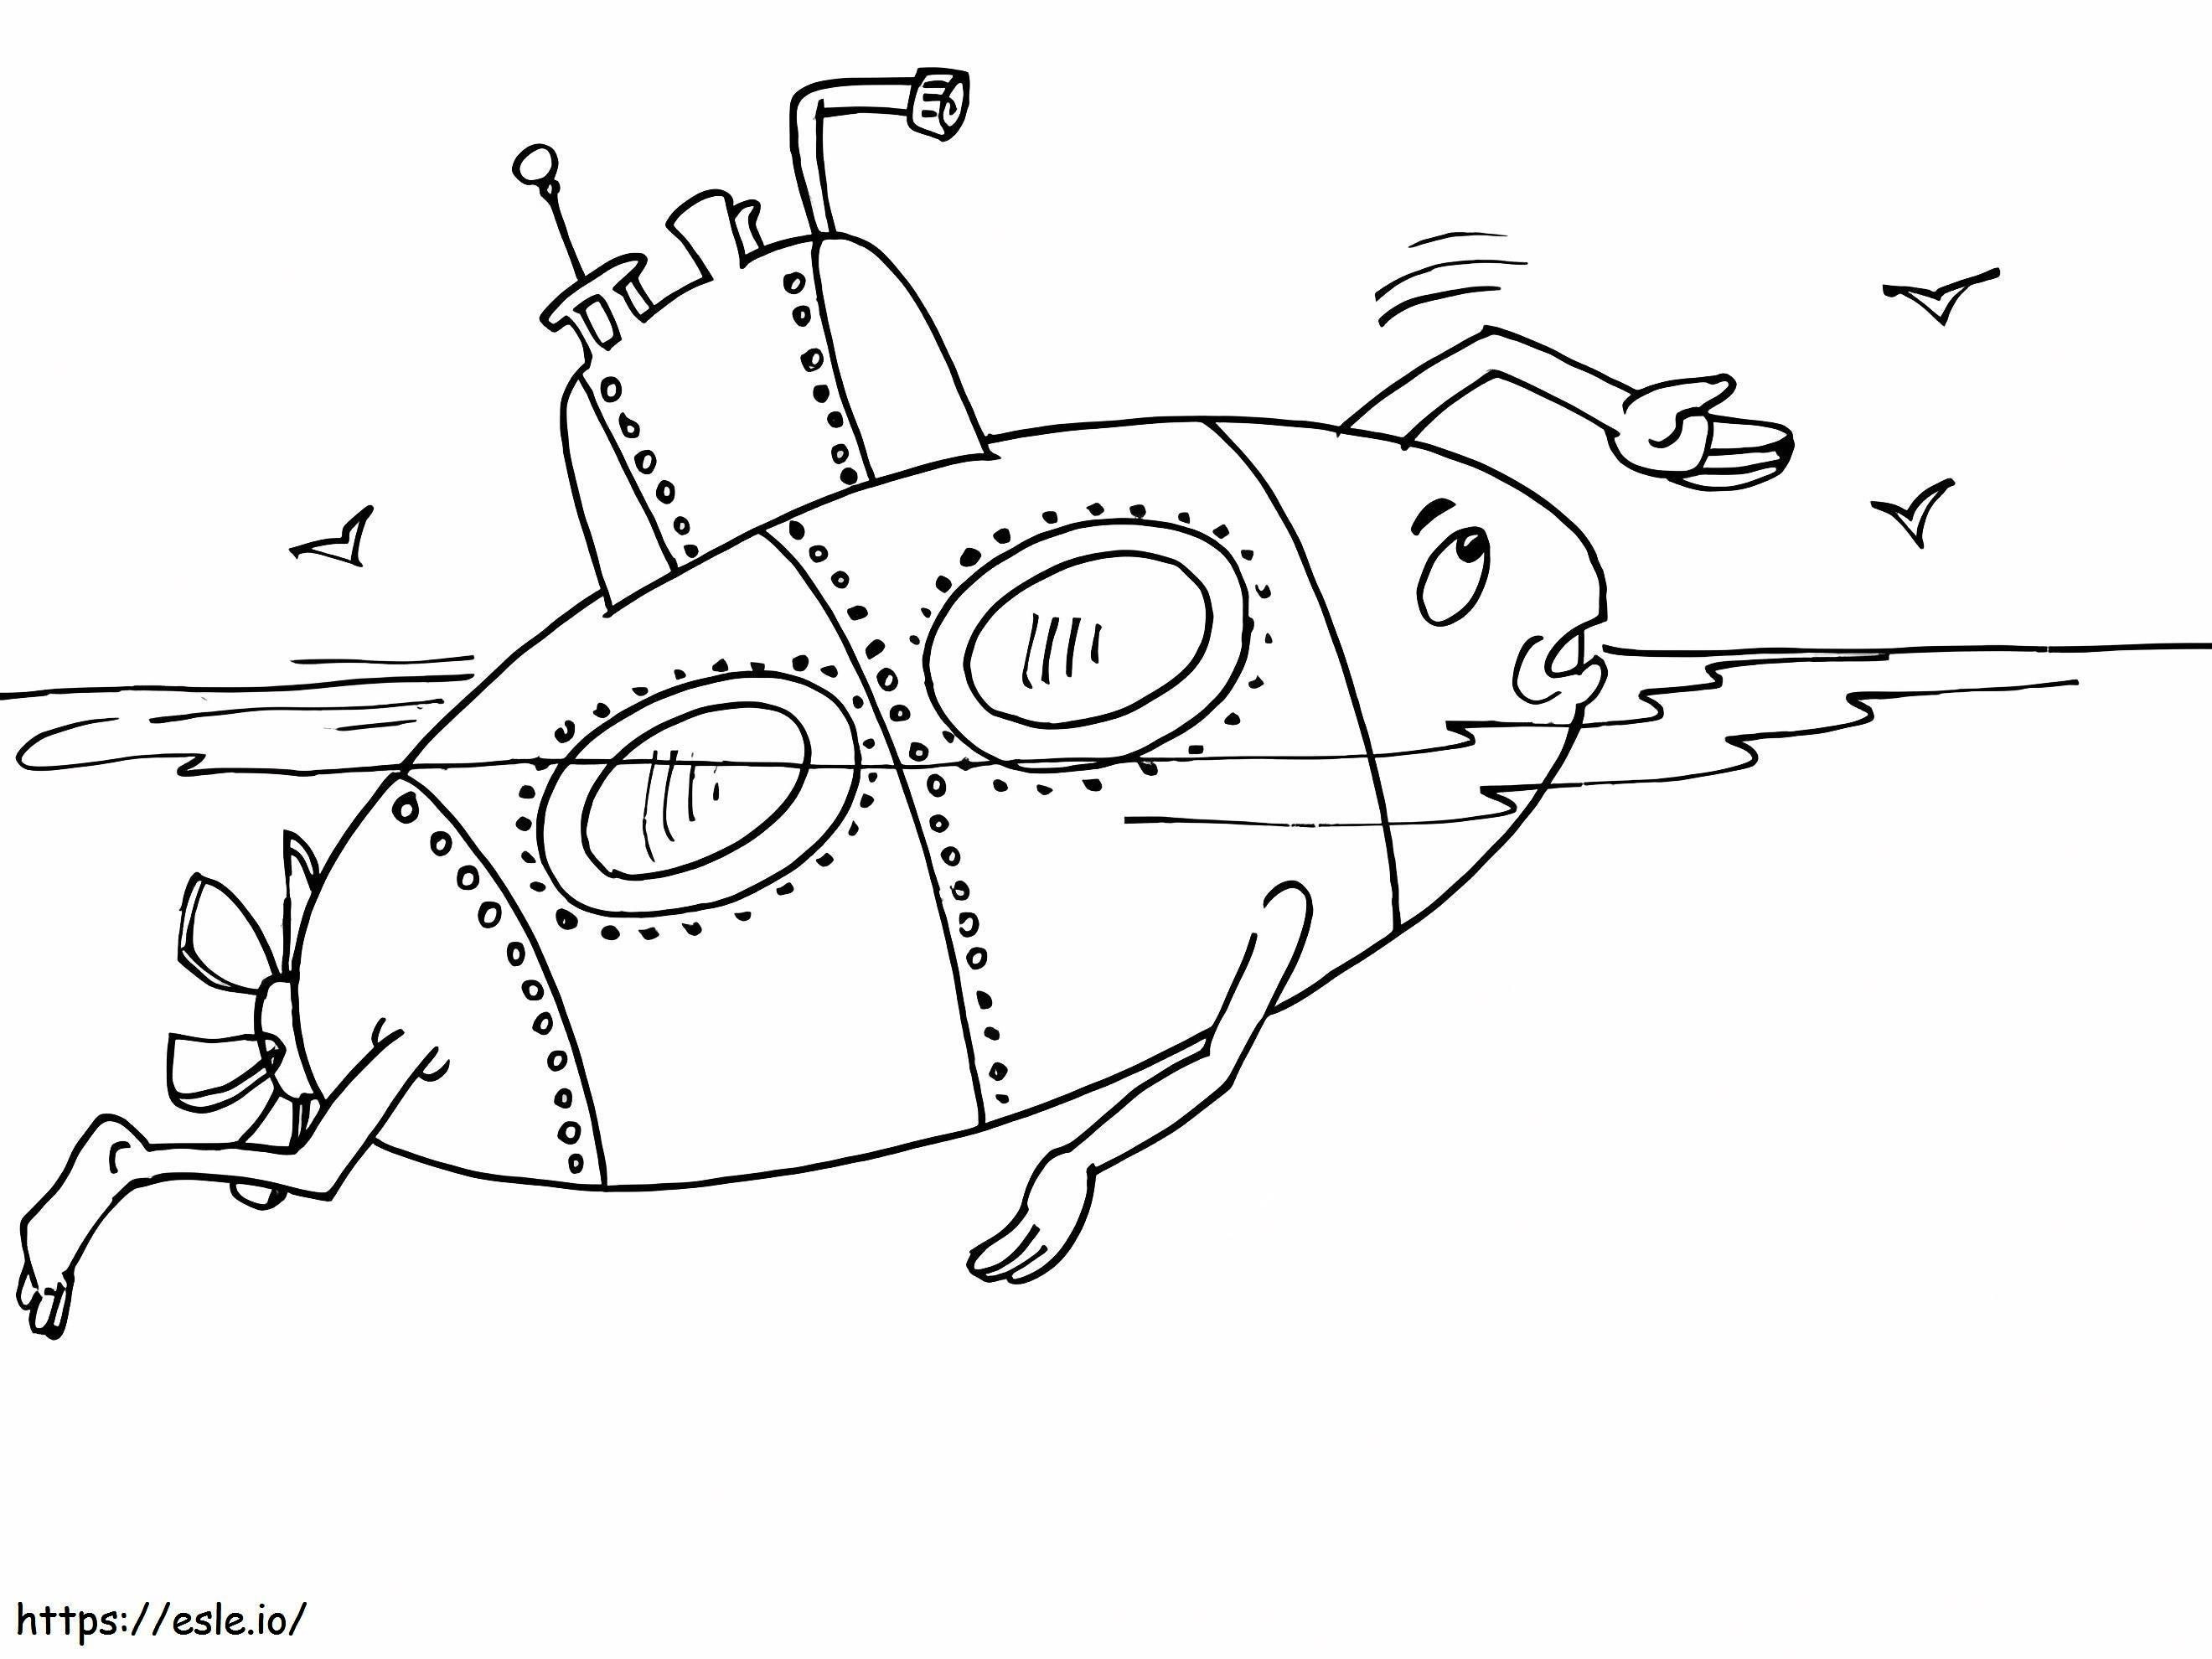 Humorous Submarine coloring page